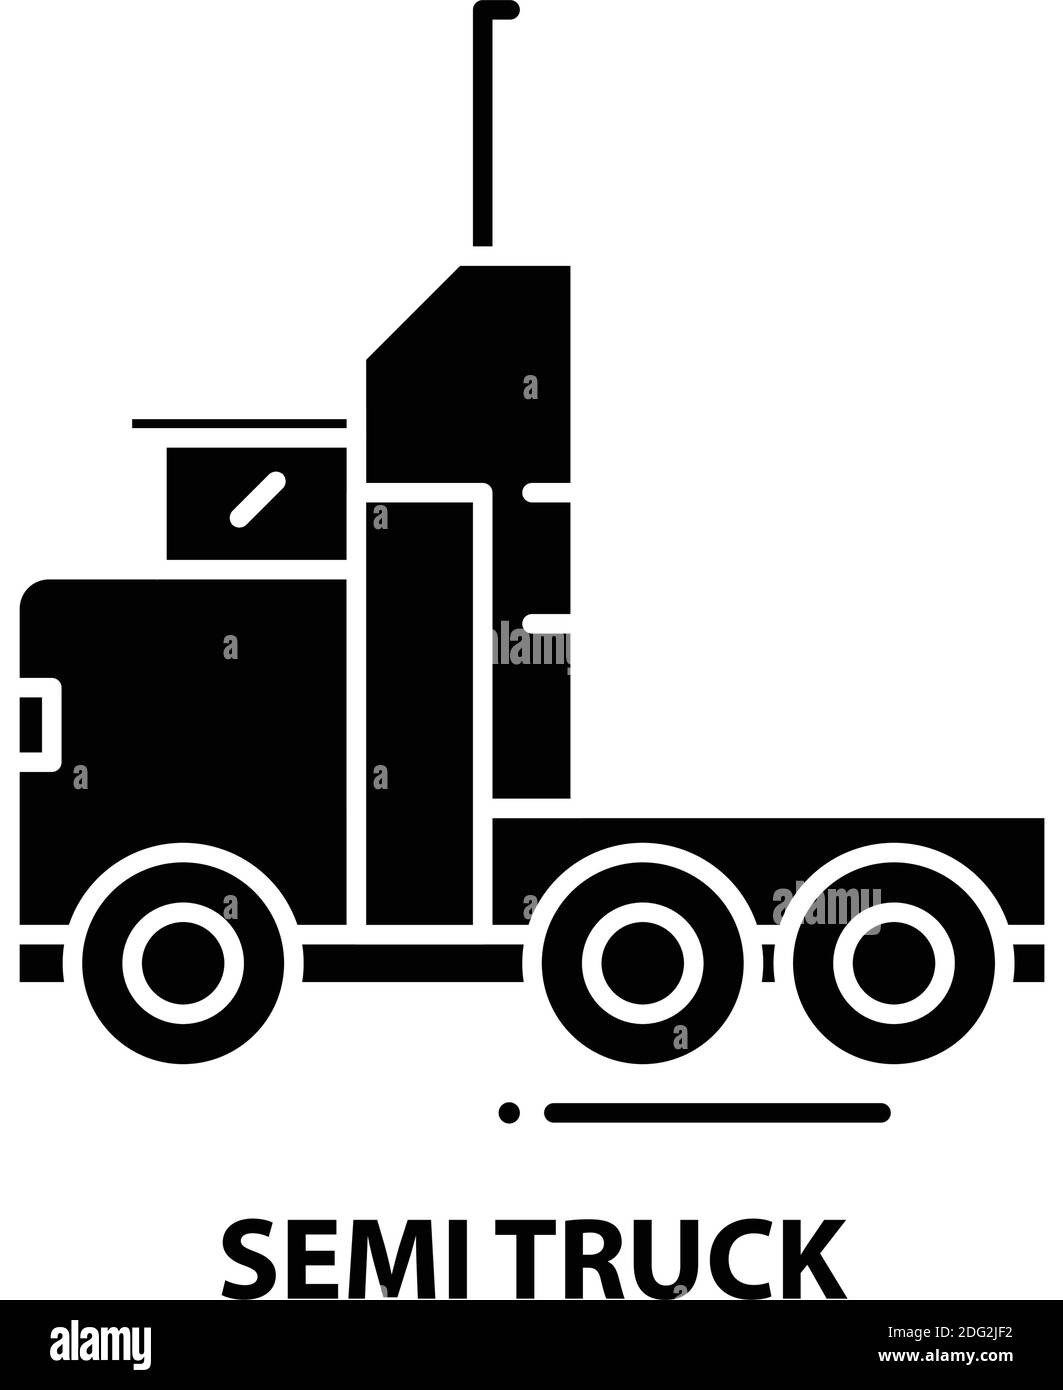 semi truck icon, black vector sign with editable strokes, concept illustration Stock Vector